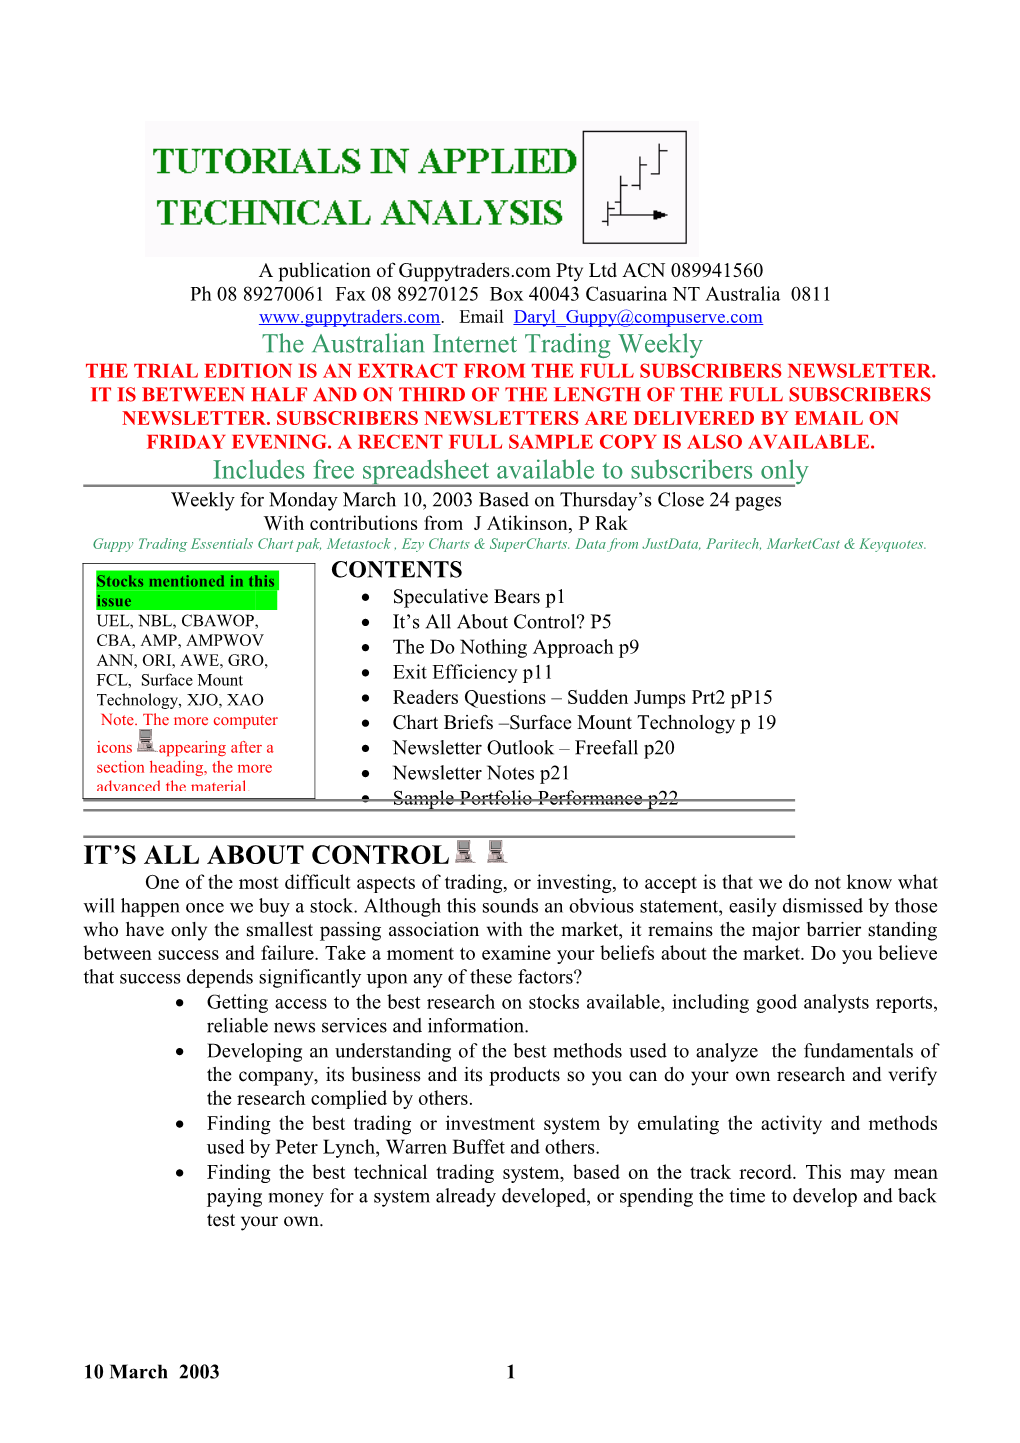 A Publication of Guppytraders.Com Pty Ltd ACN 089941560